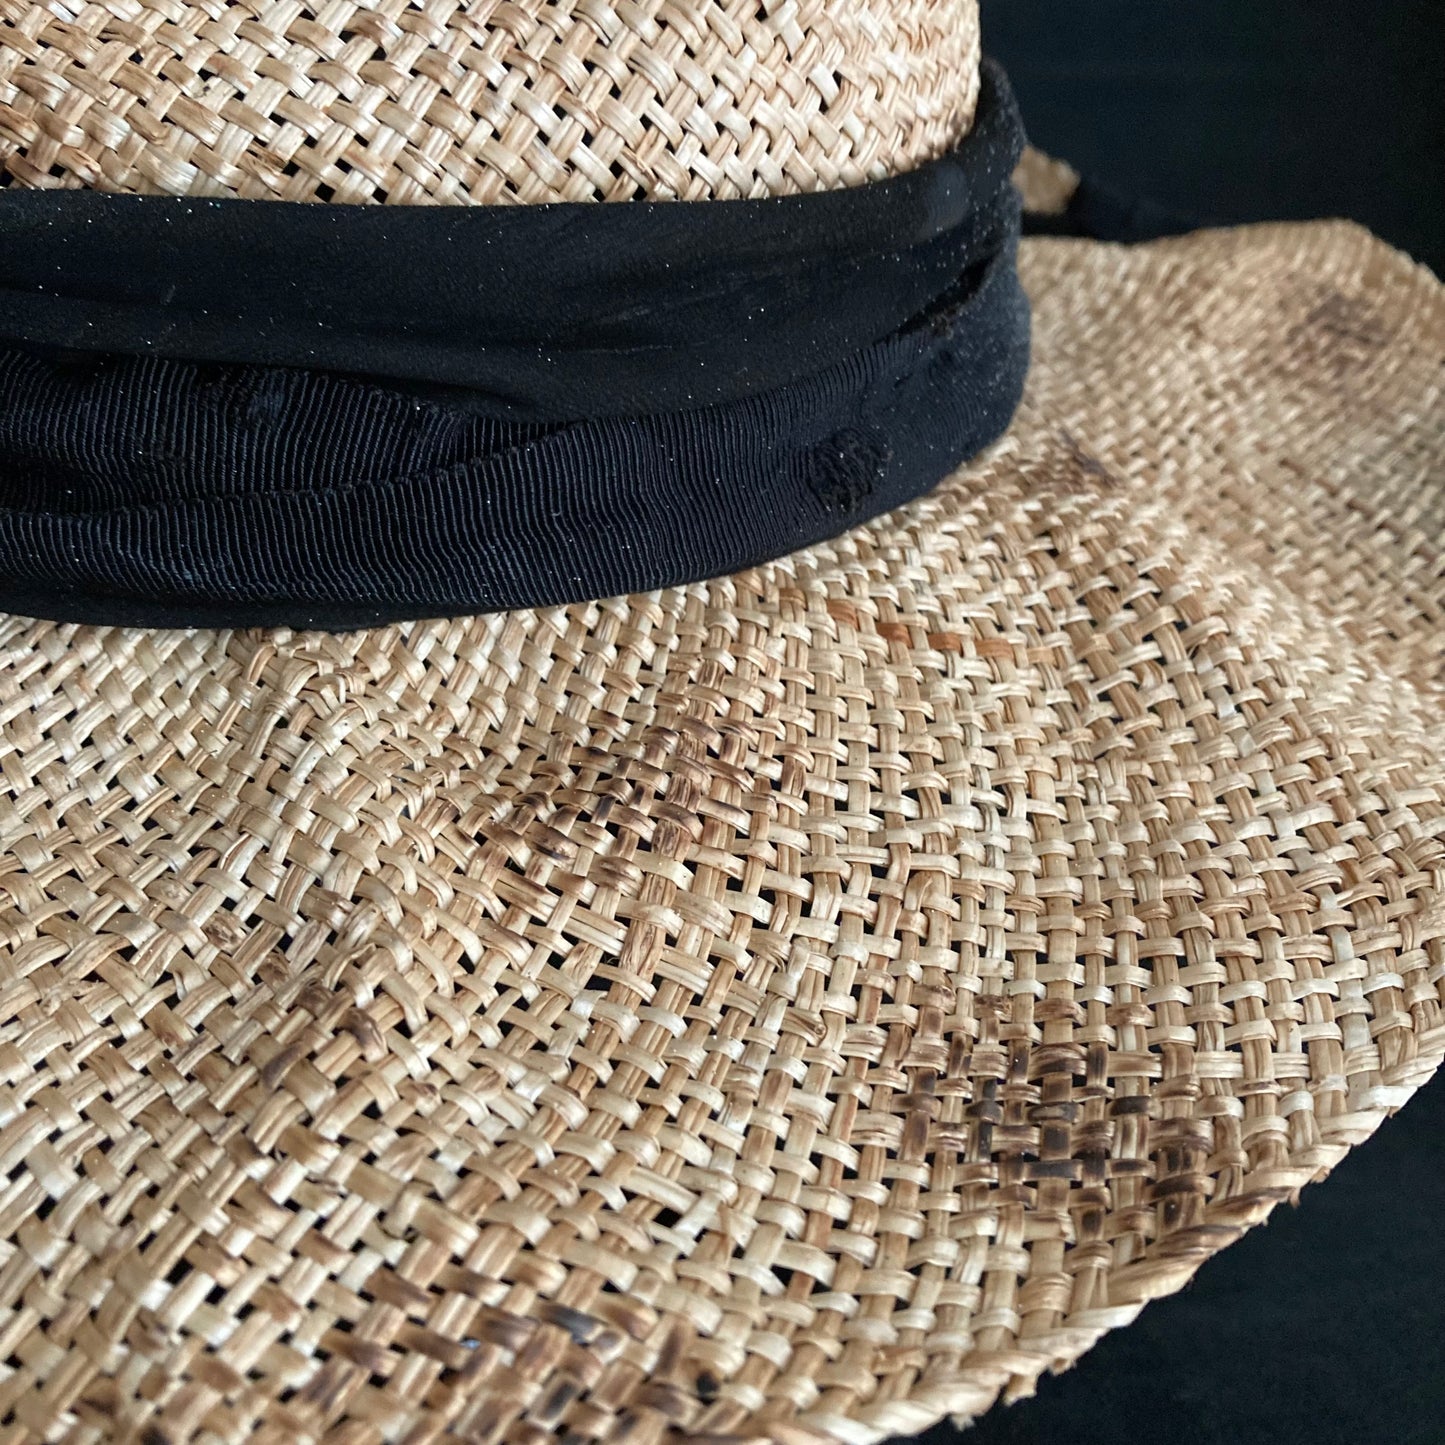 Burnt flower bao  hat